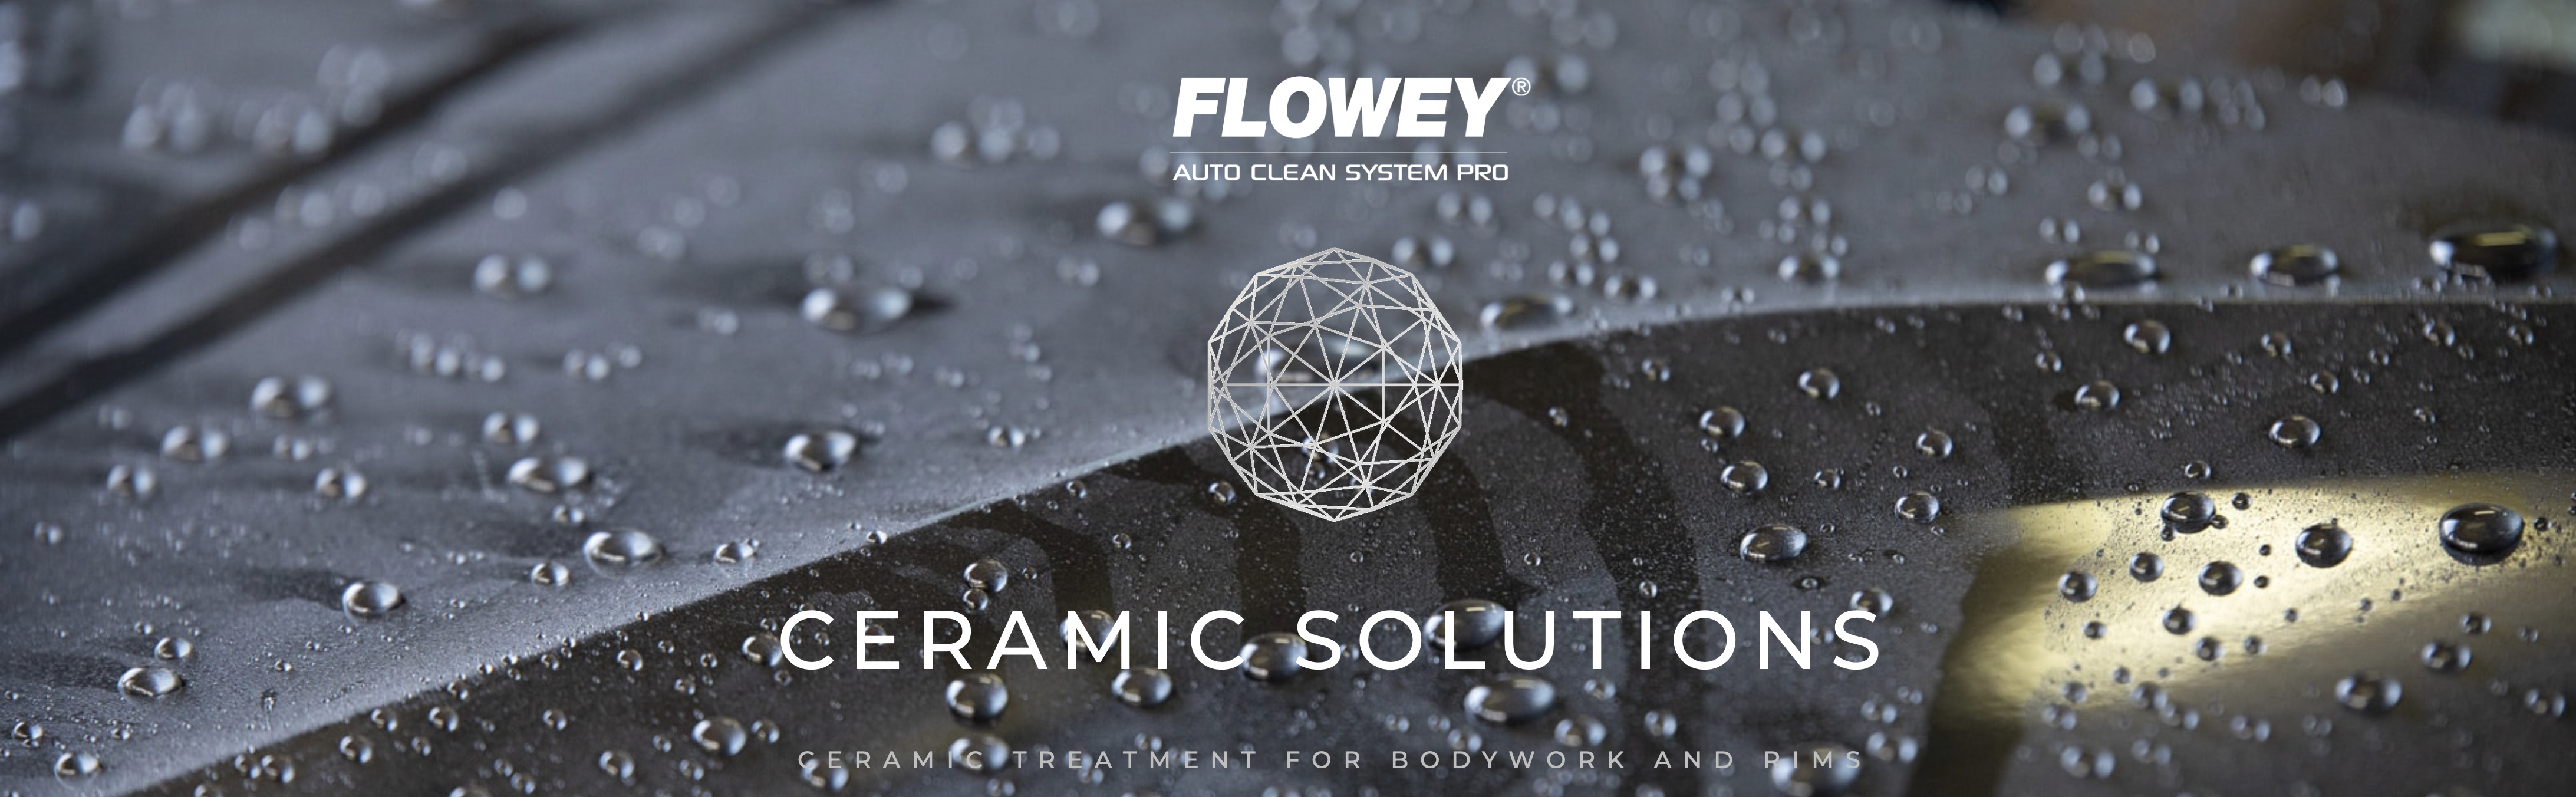 flowey-ceramic-solution.png